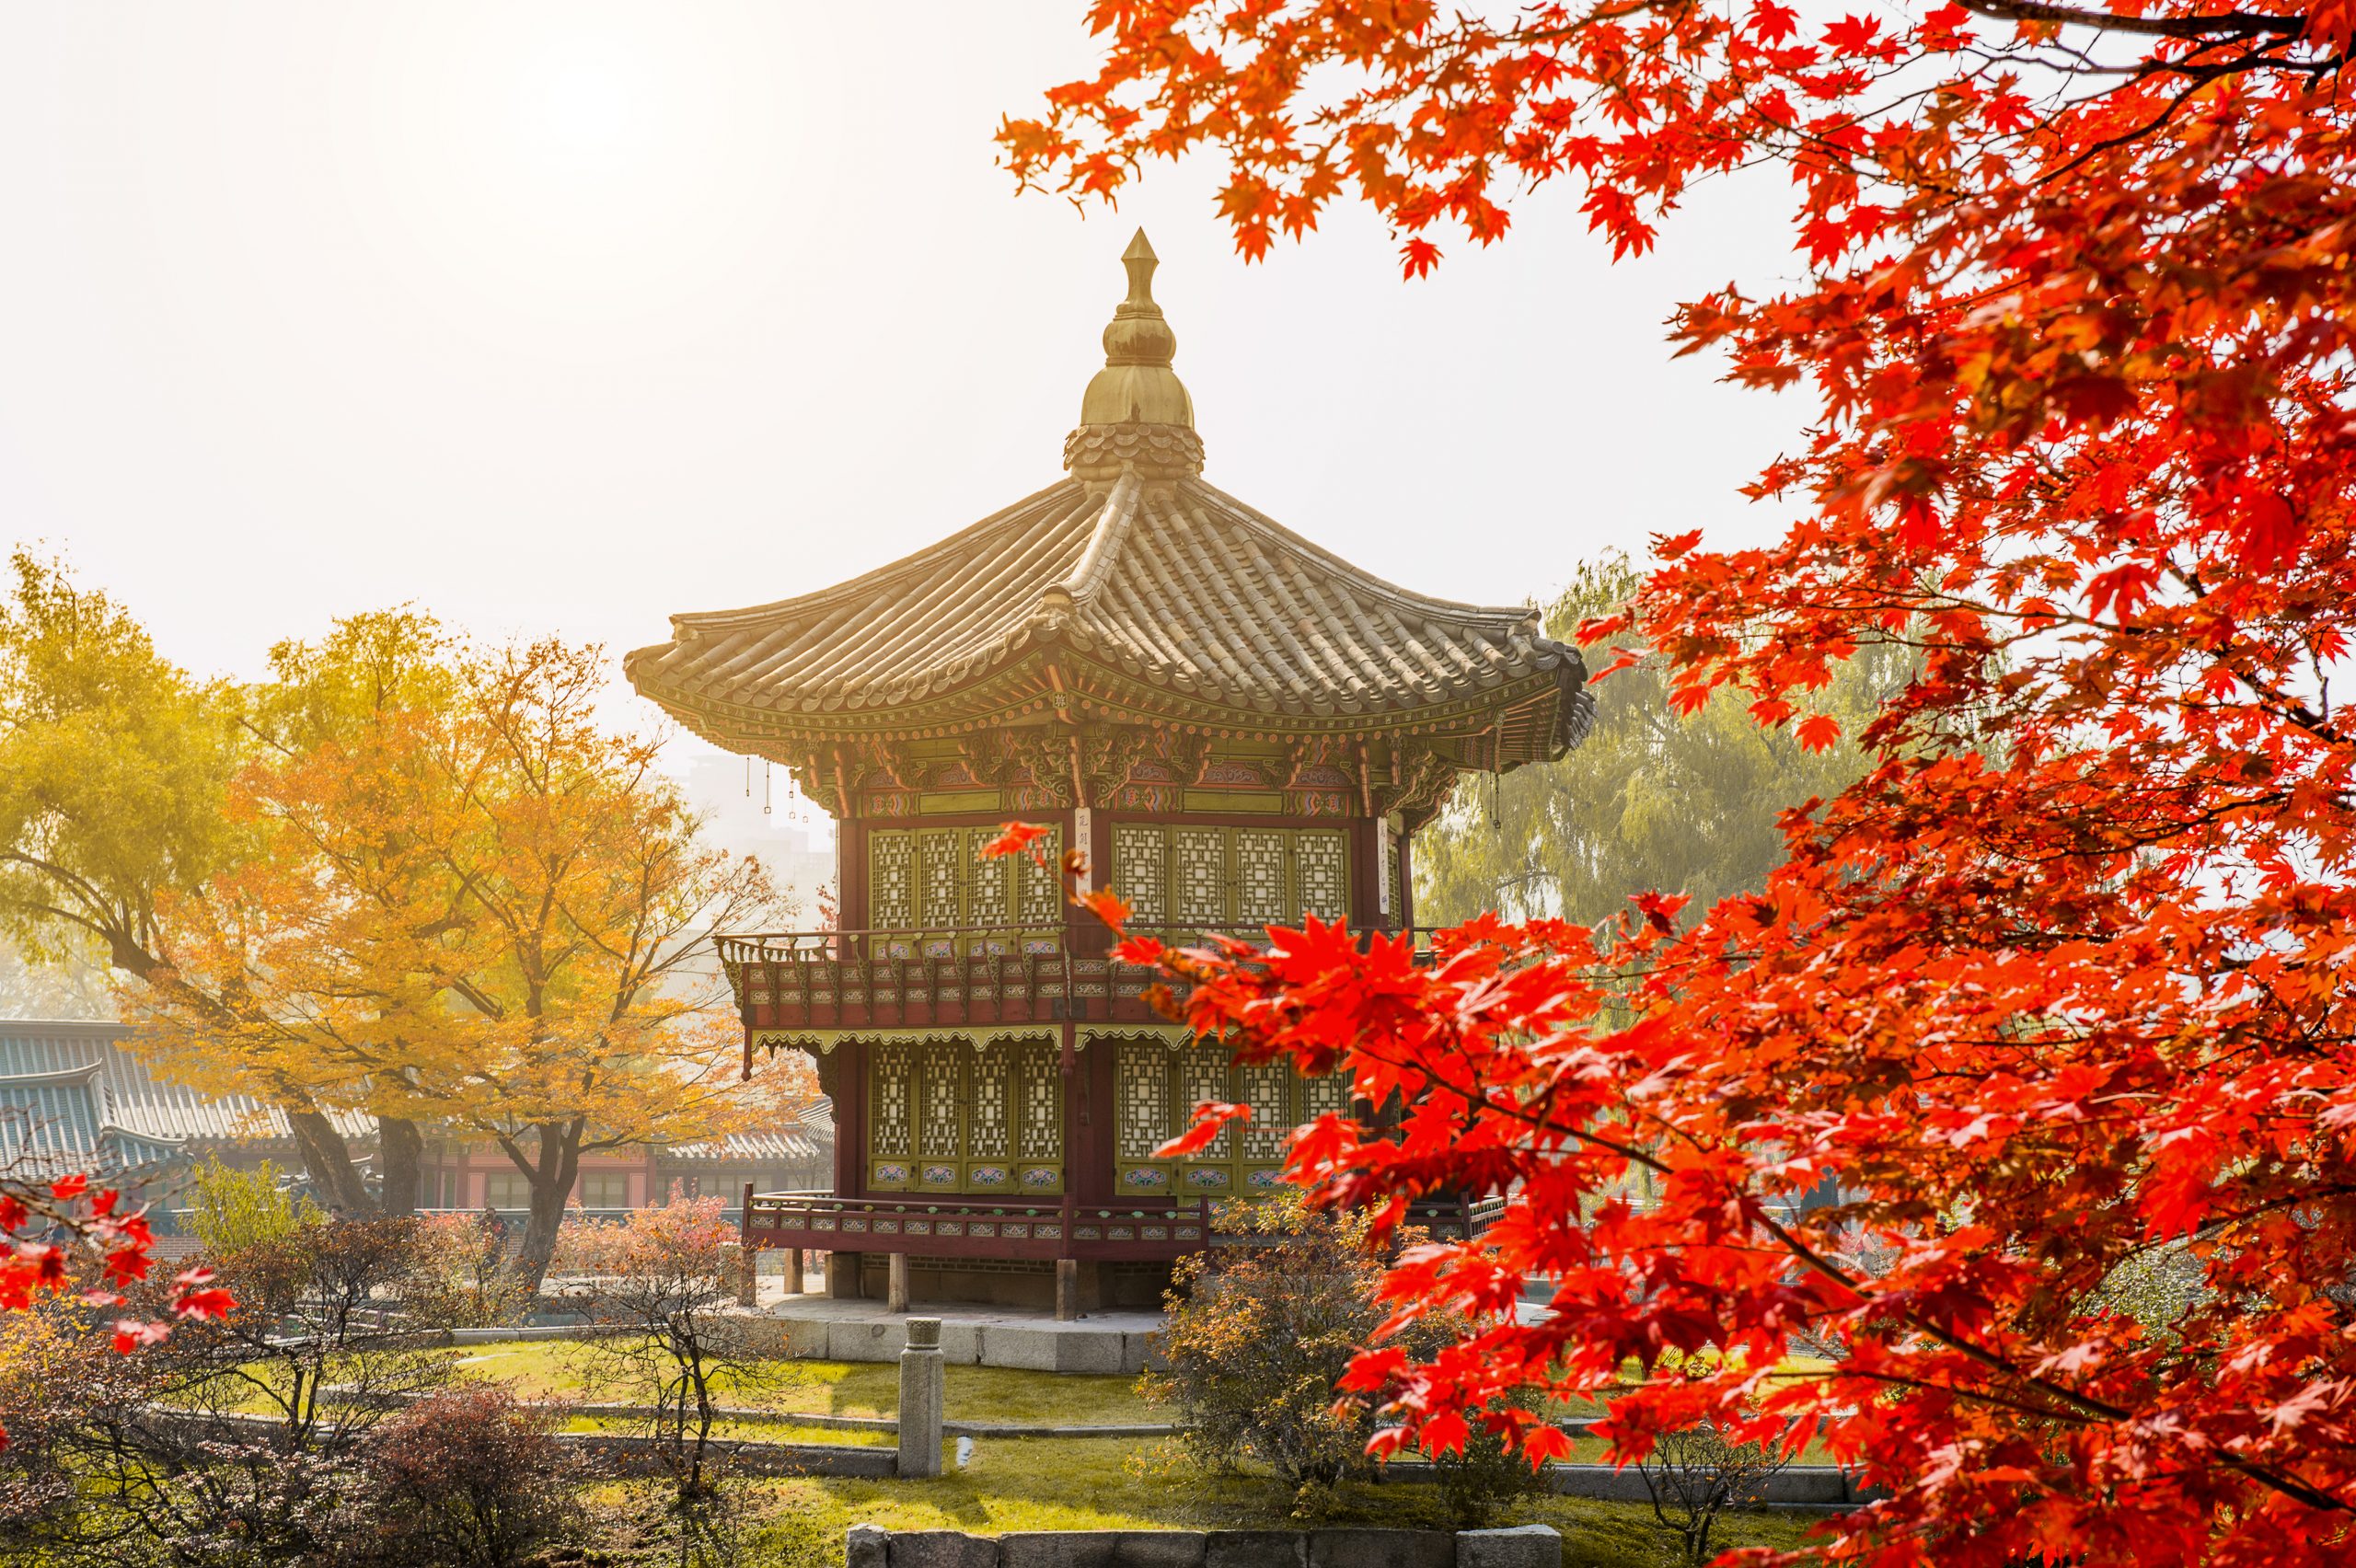 Autumn in Gyeongbokgung Palace, Seoul in South Korea.